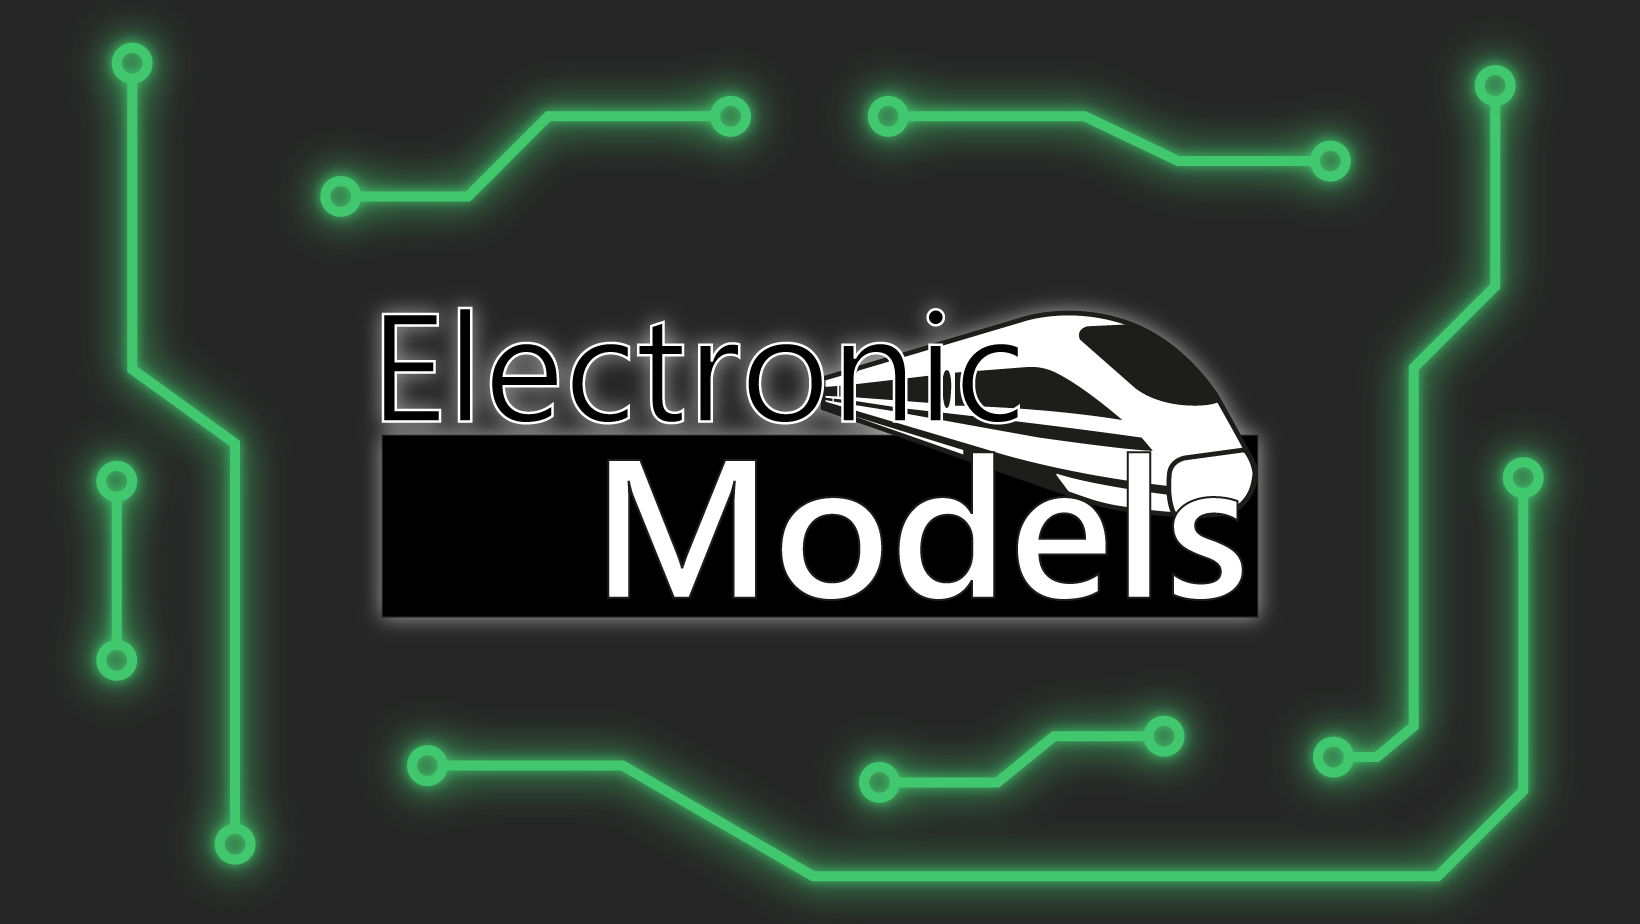 ELECTRONIC MODELS